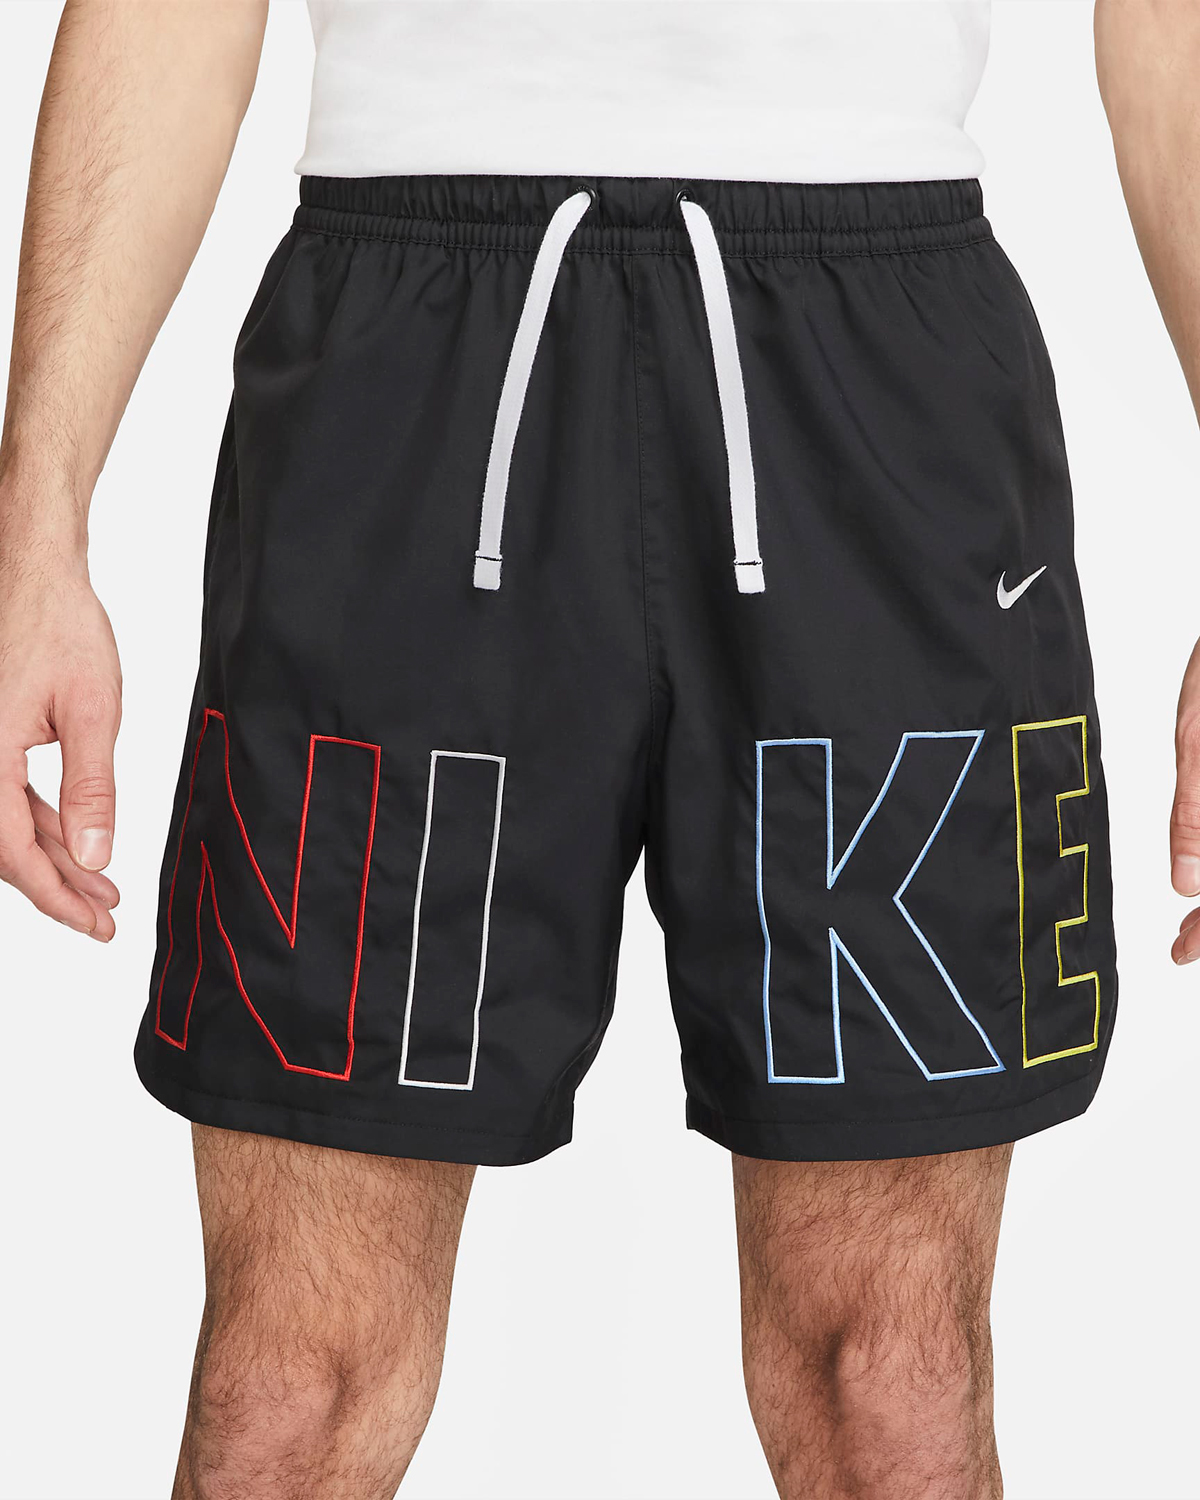 Nike-Sportswear-Graphic-Woven-Flow-Shorts-Black-White-Multi-Color